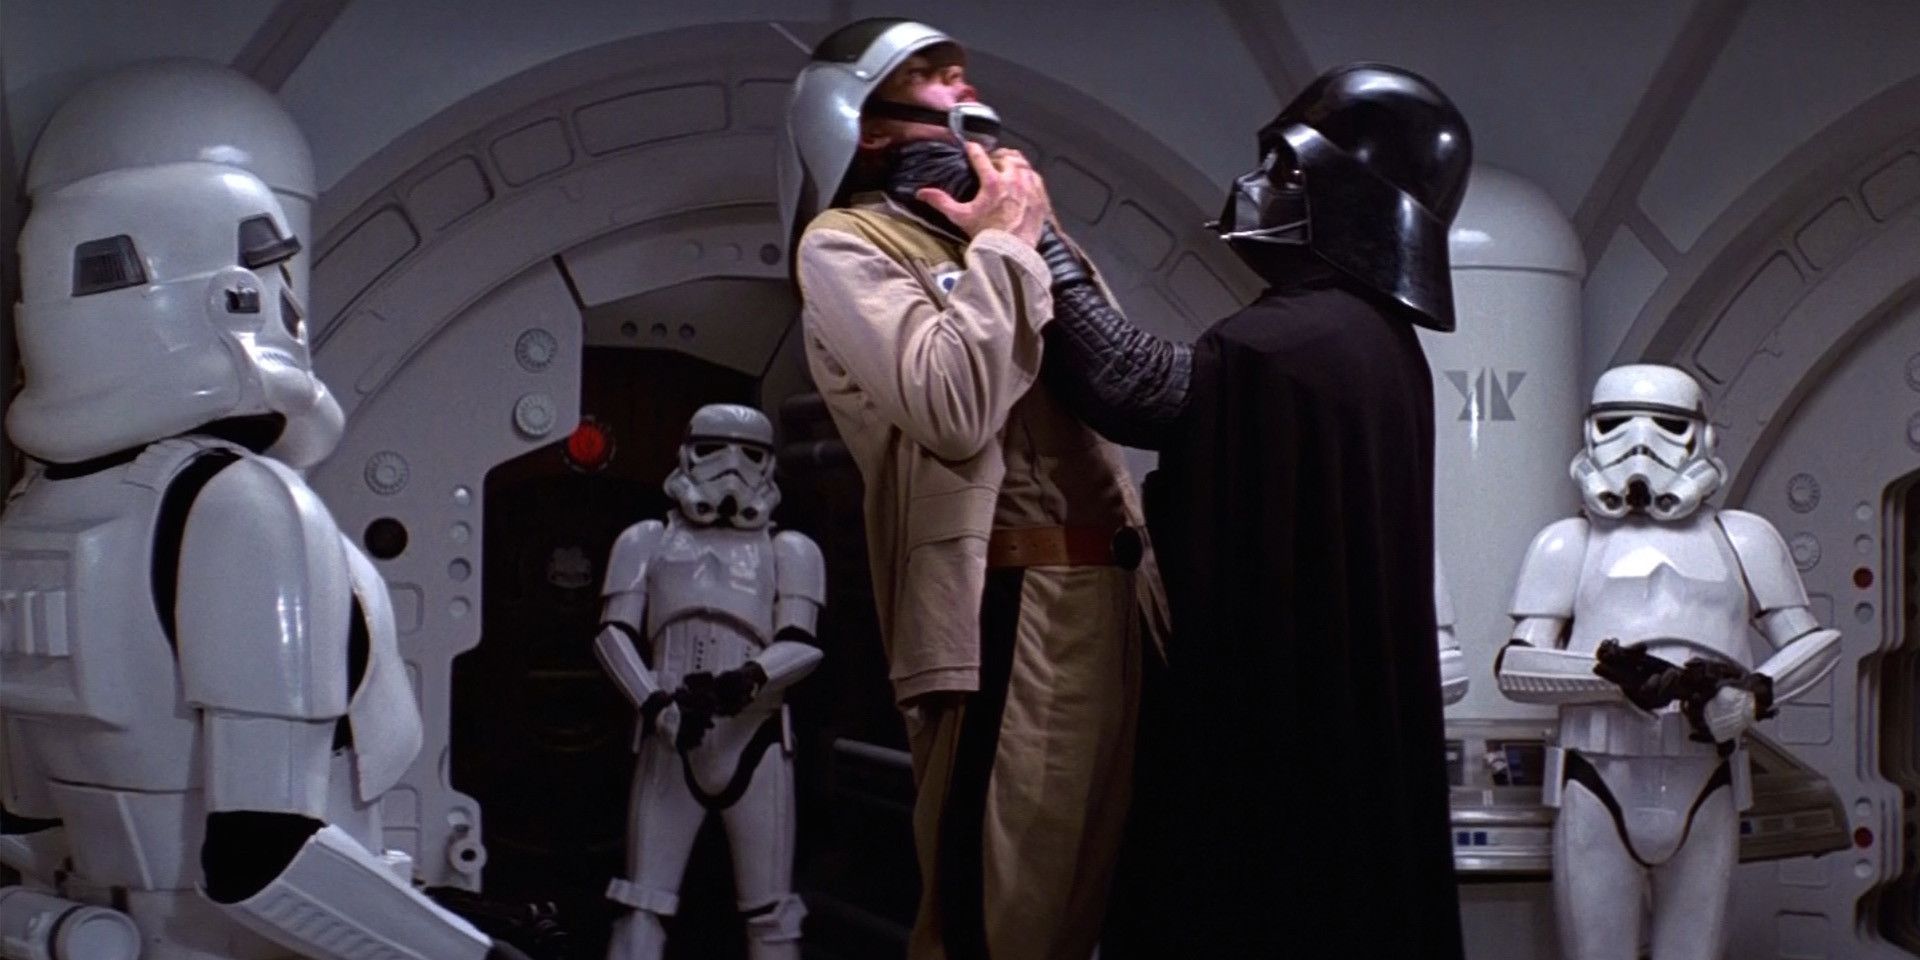 Darth Vader Lifts an Officer Up